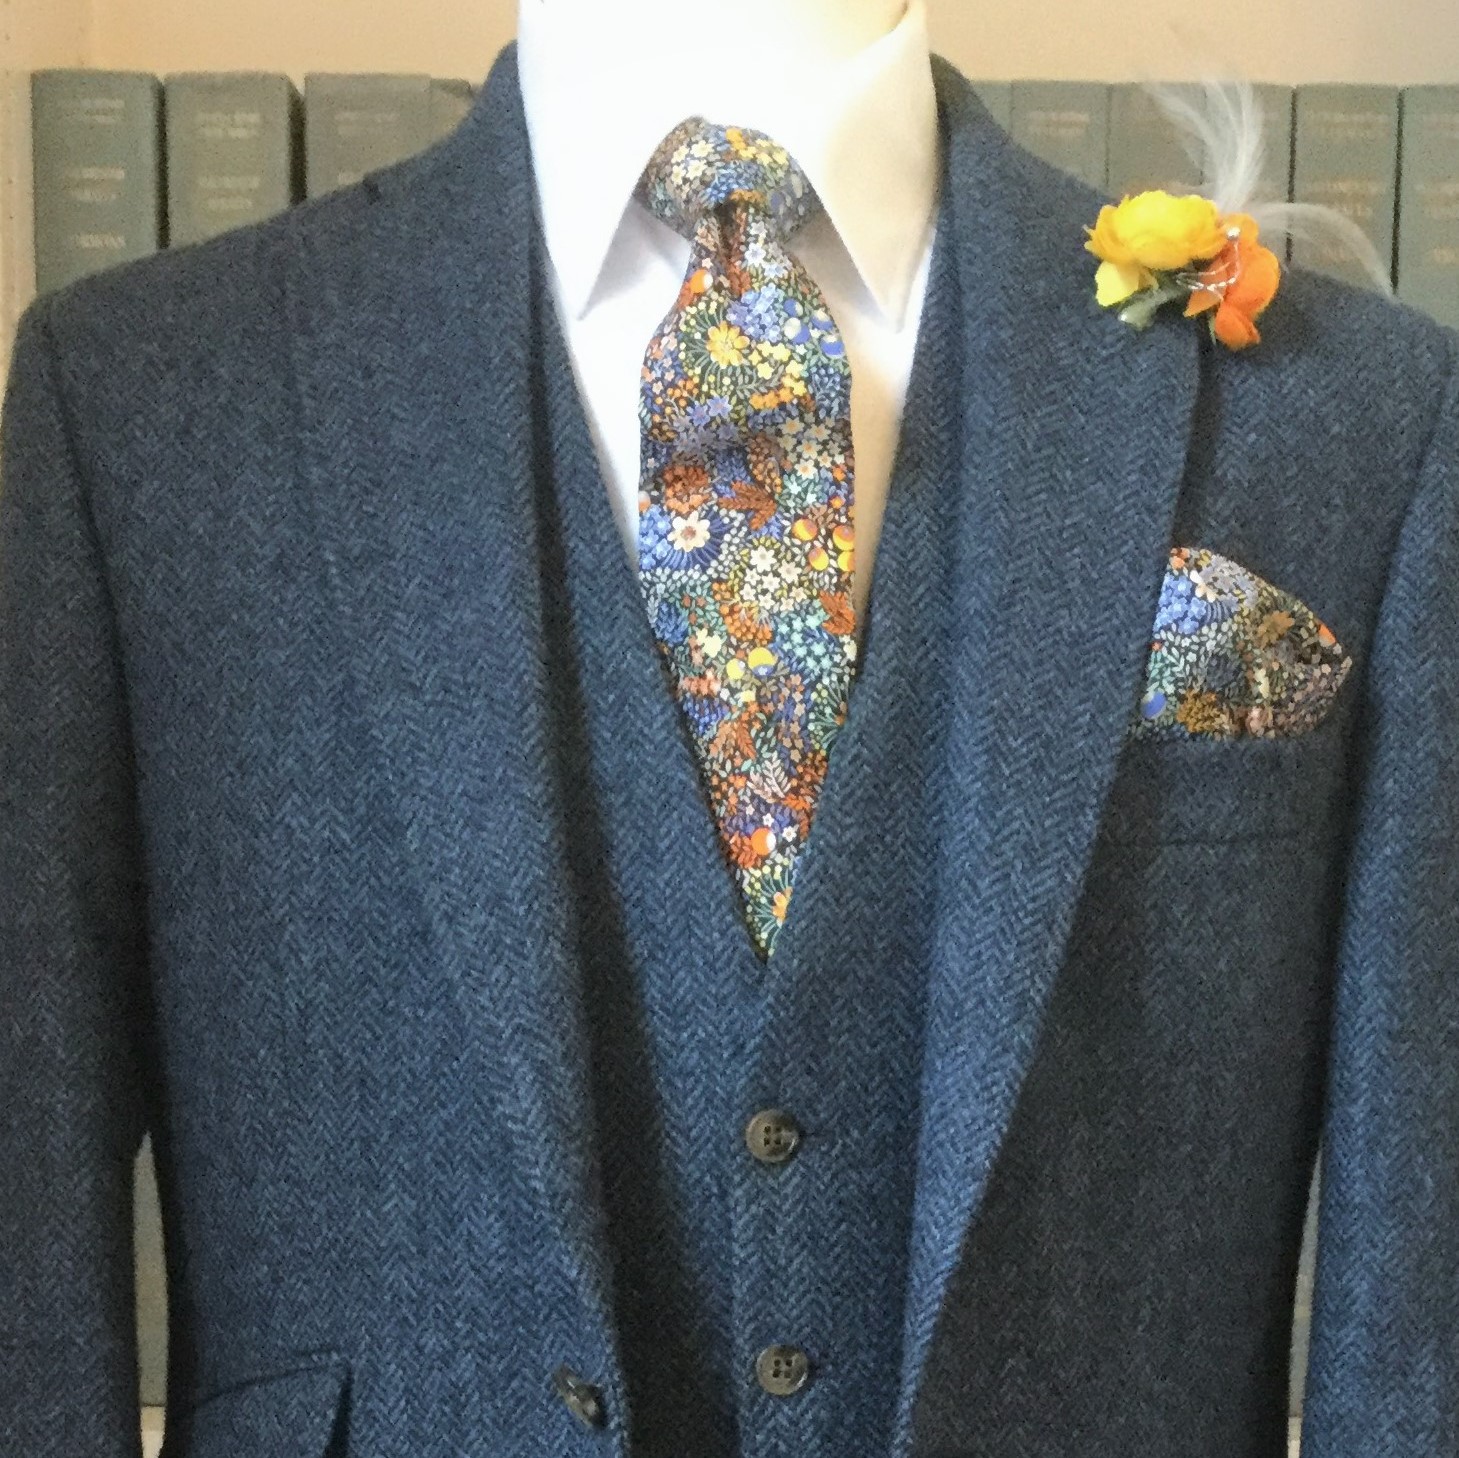 Black Tie | Suit Hire & Bespoke Tailors In Berkshire, Hampshire & Surrey